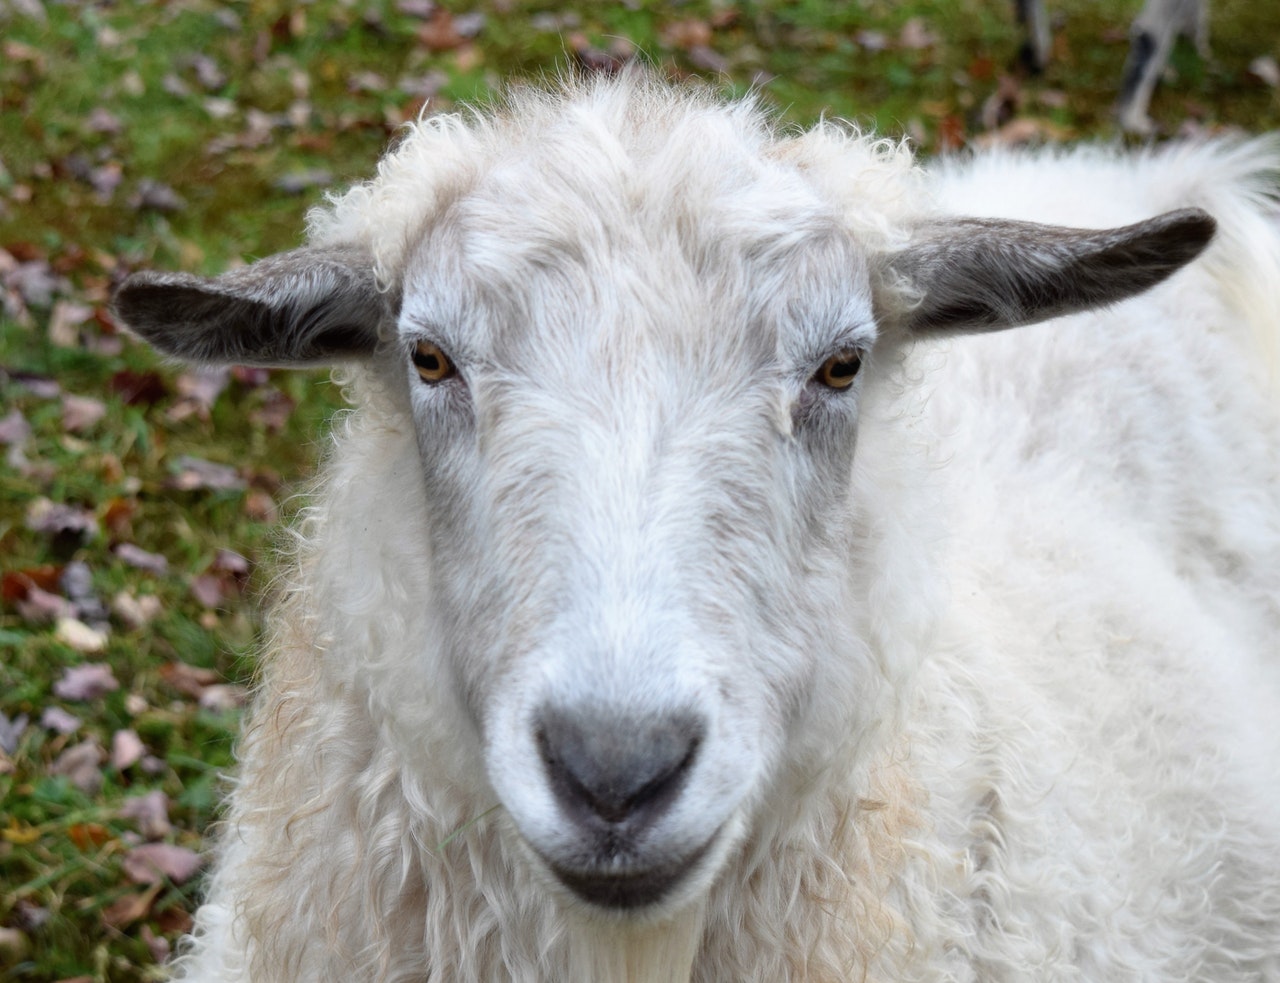 white-sheep-on-green-grass-693151